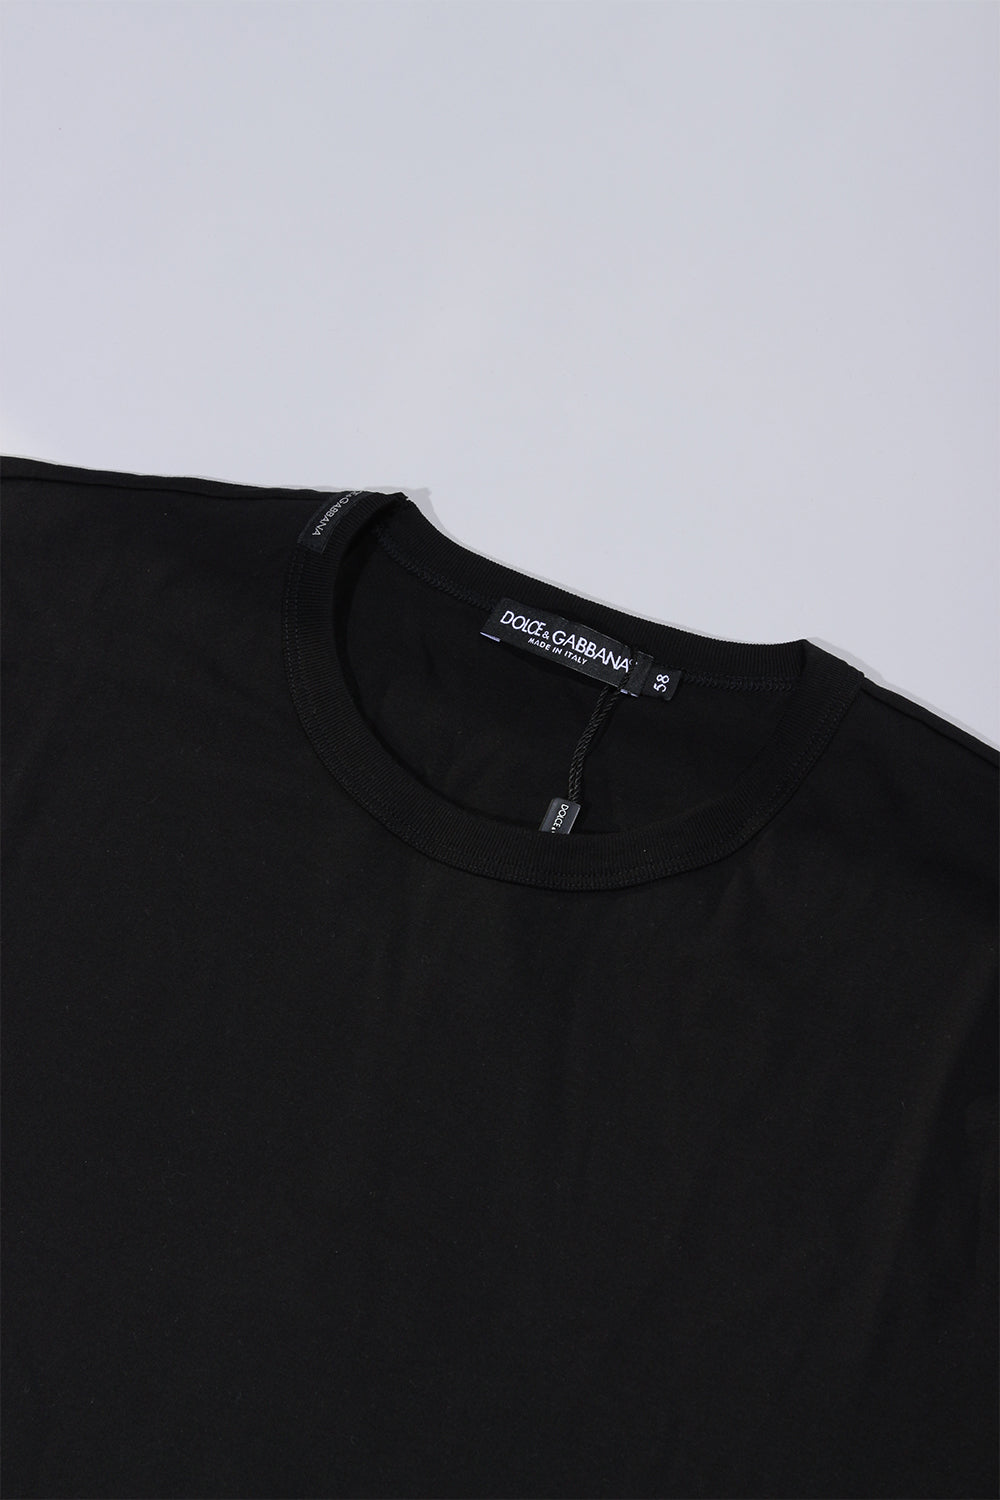 Dolce & Gabbana long sleeves t-shirt black